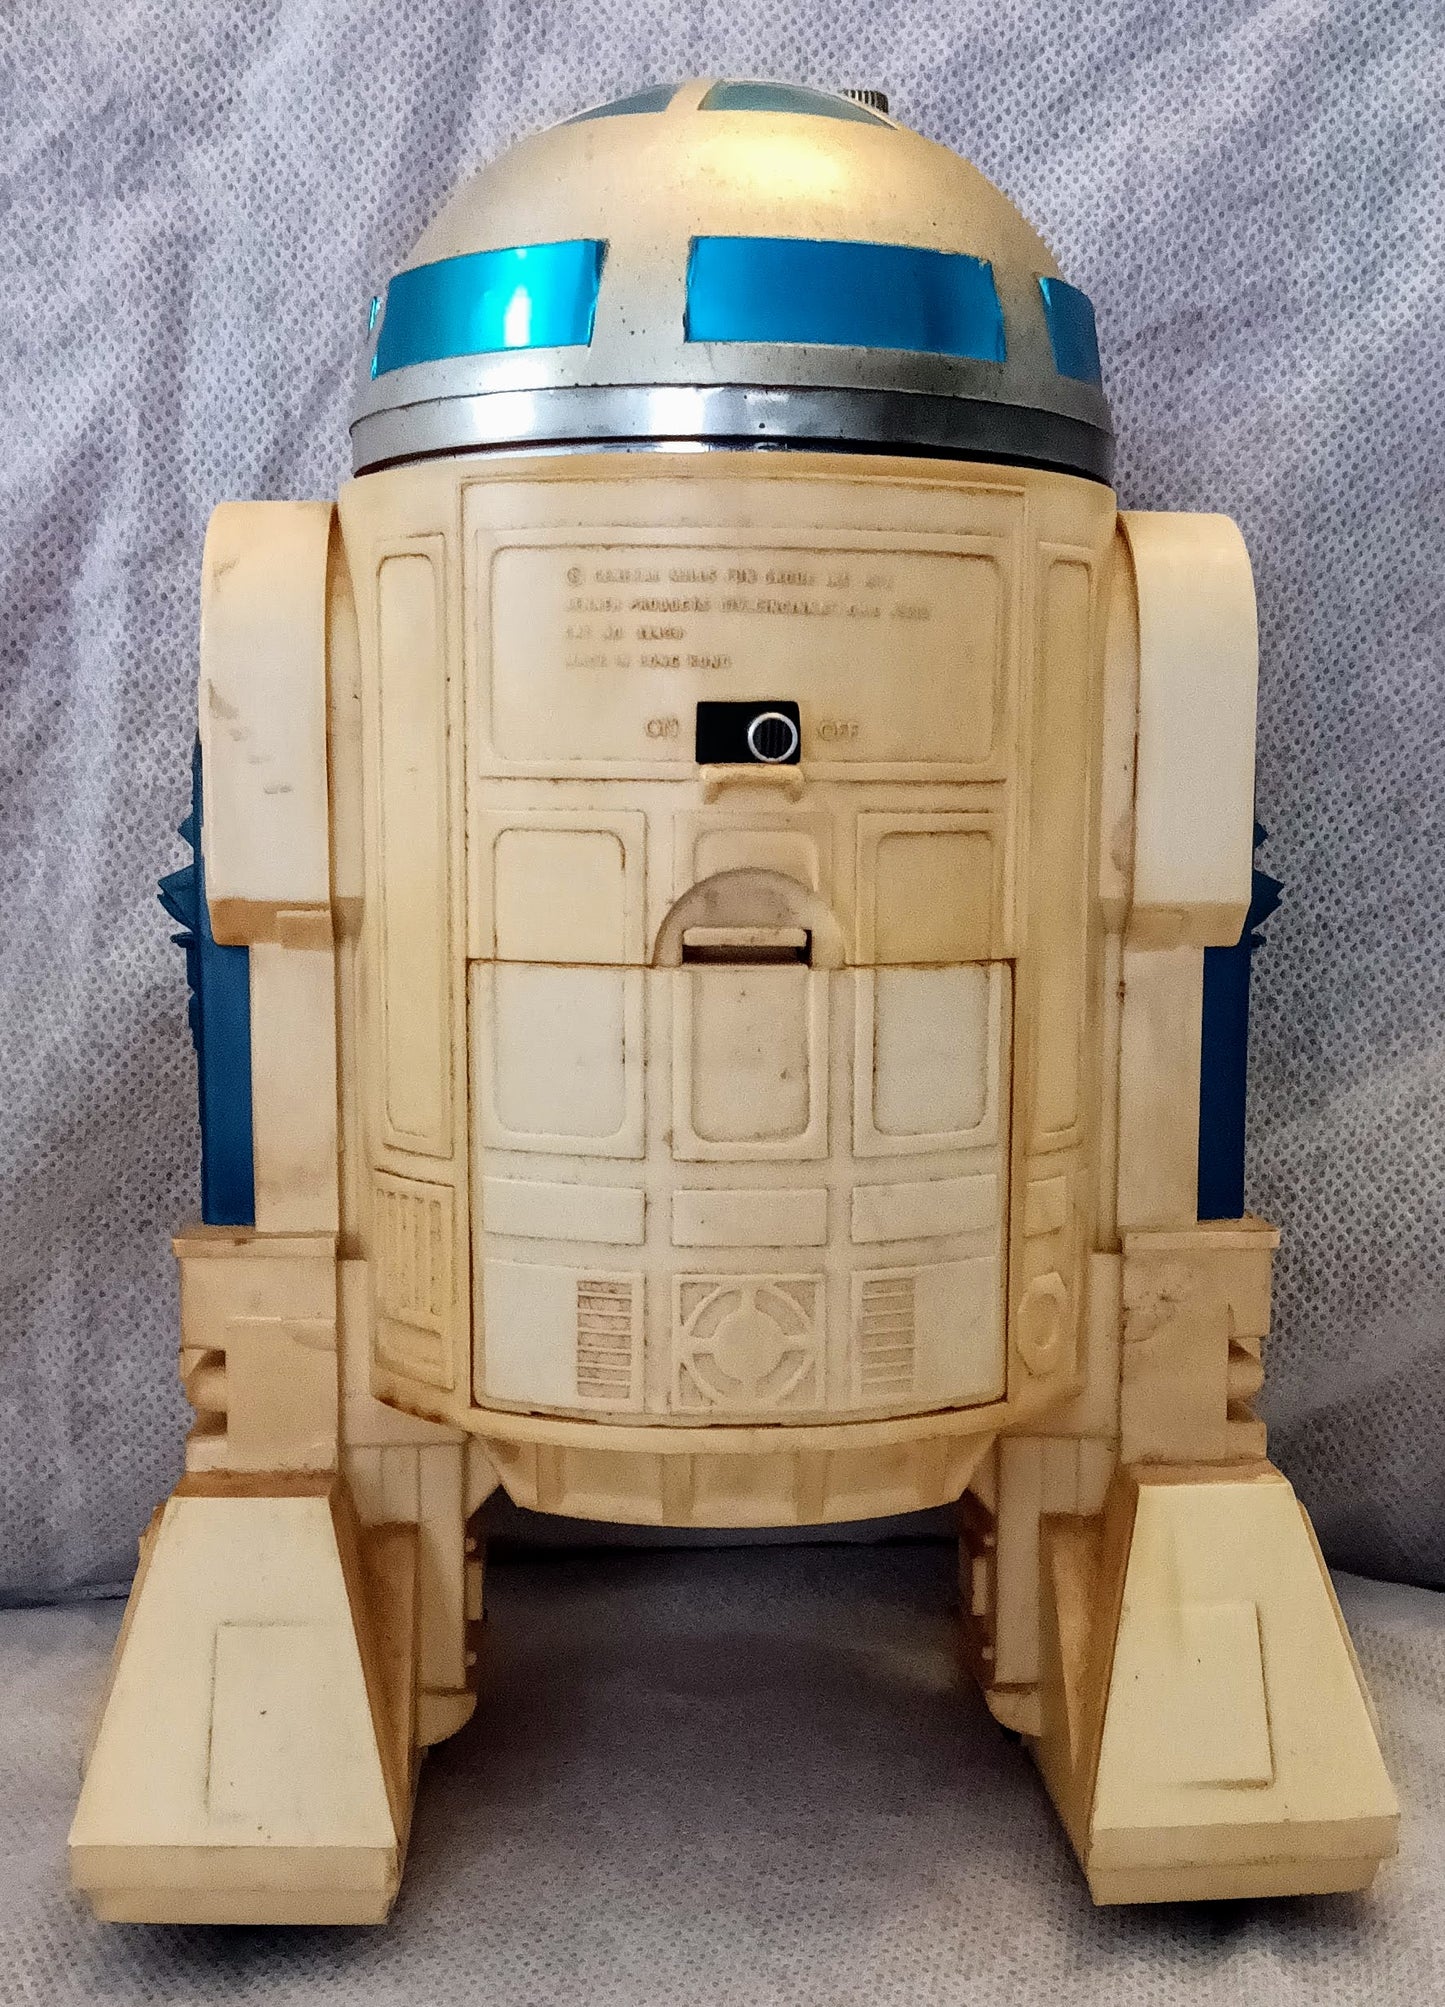 Star Wars Remote Control R2-D2